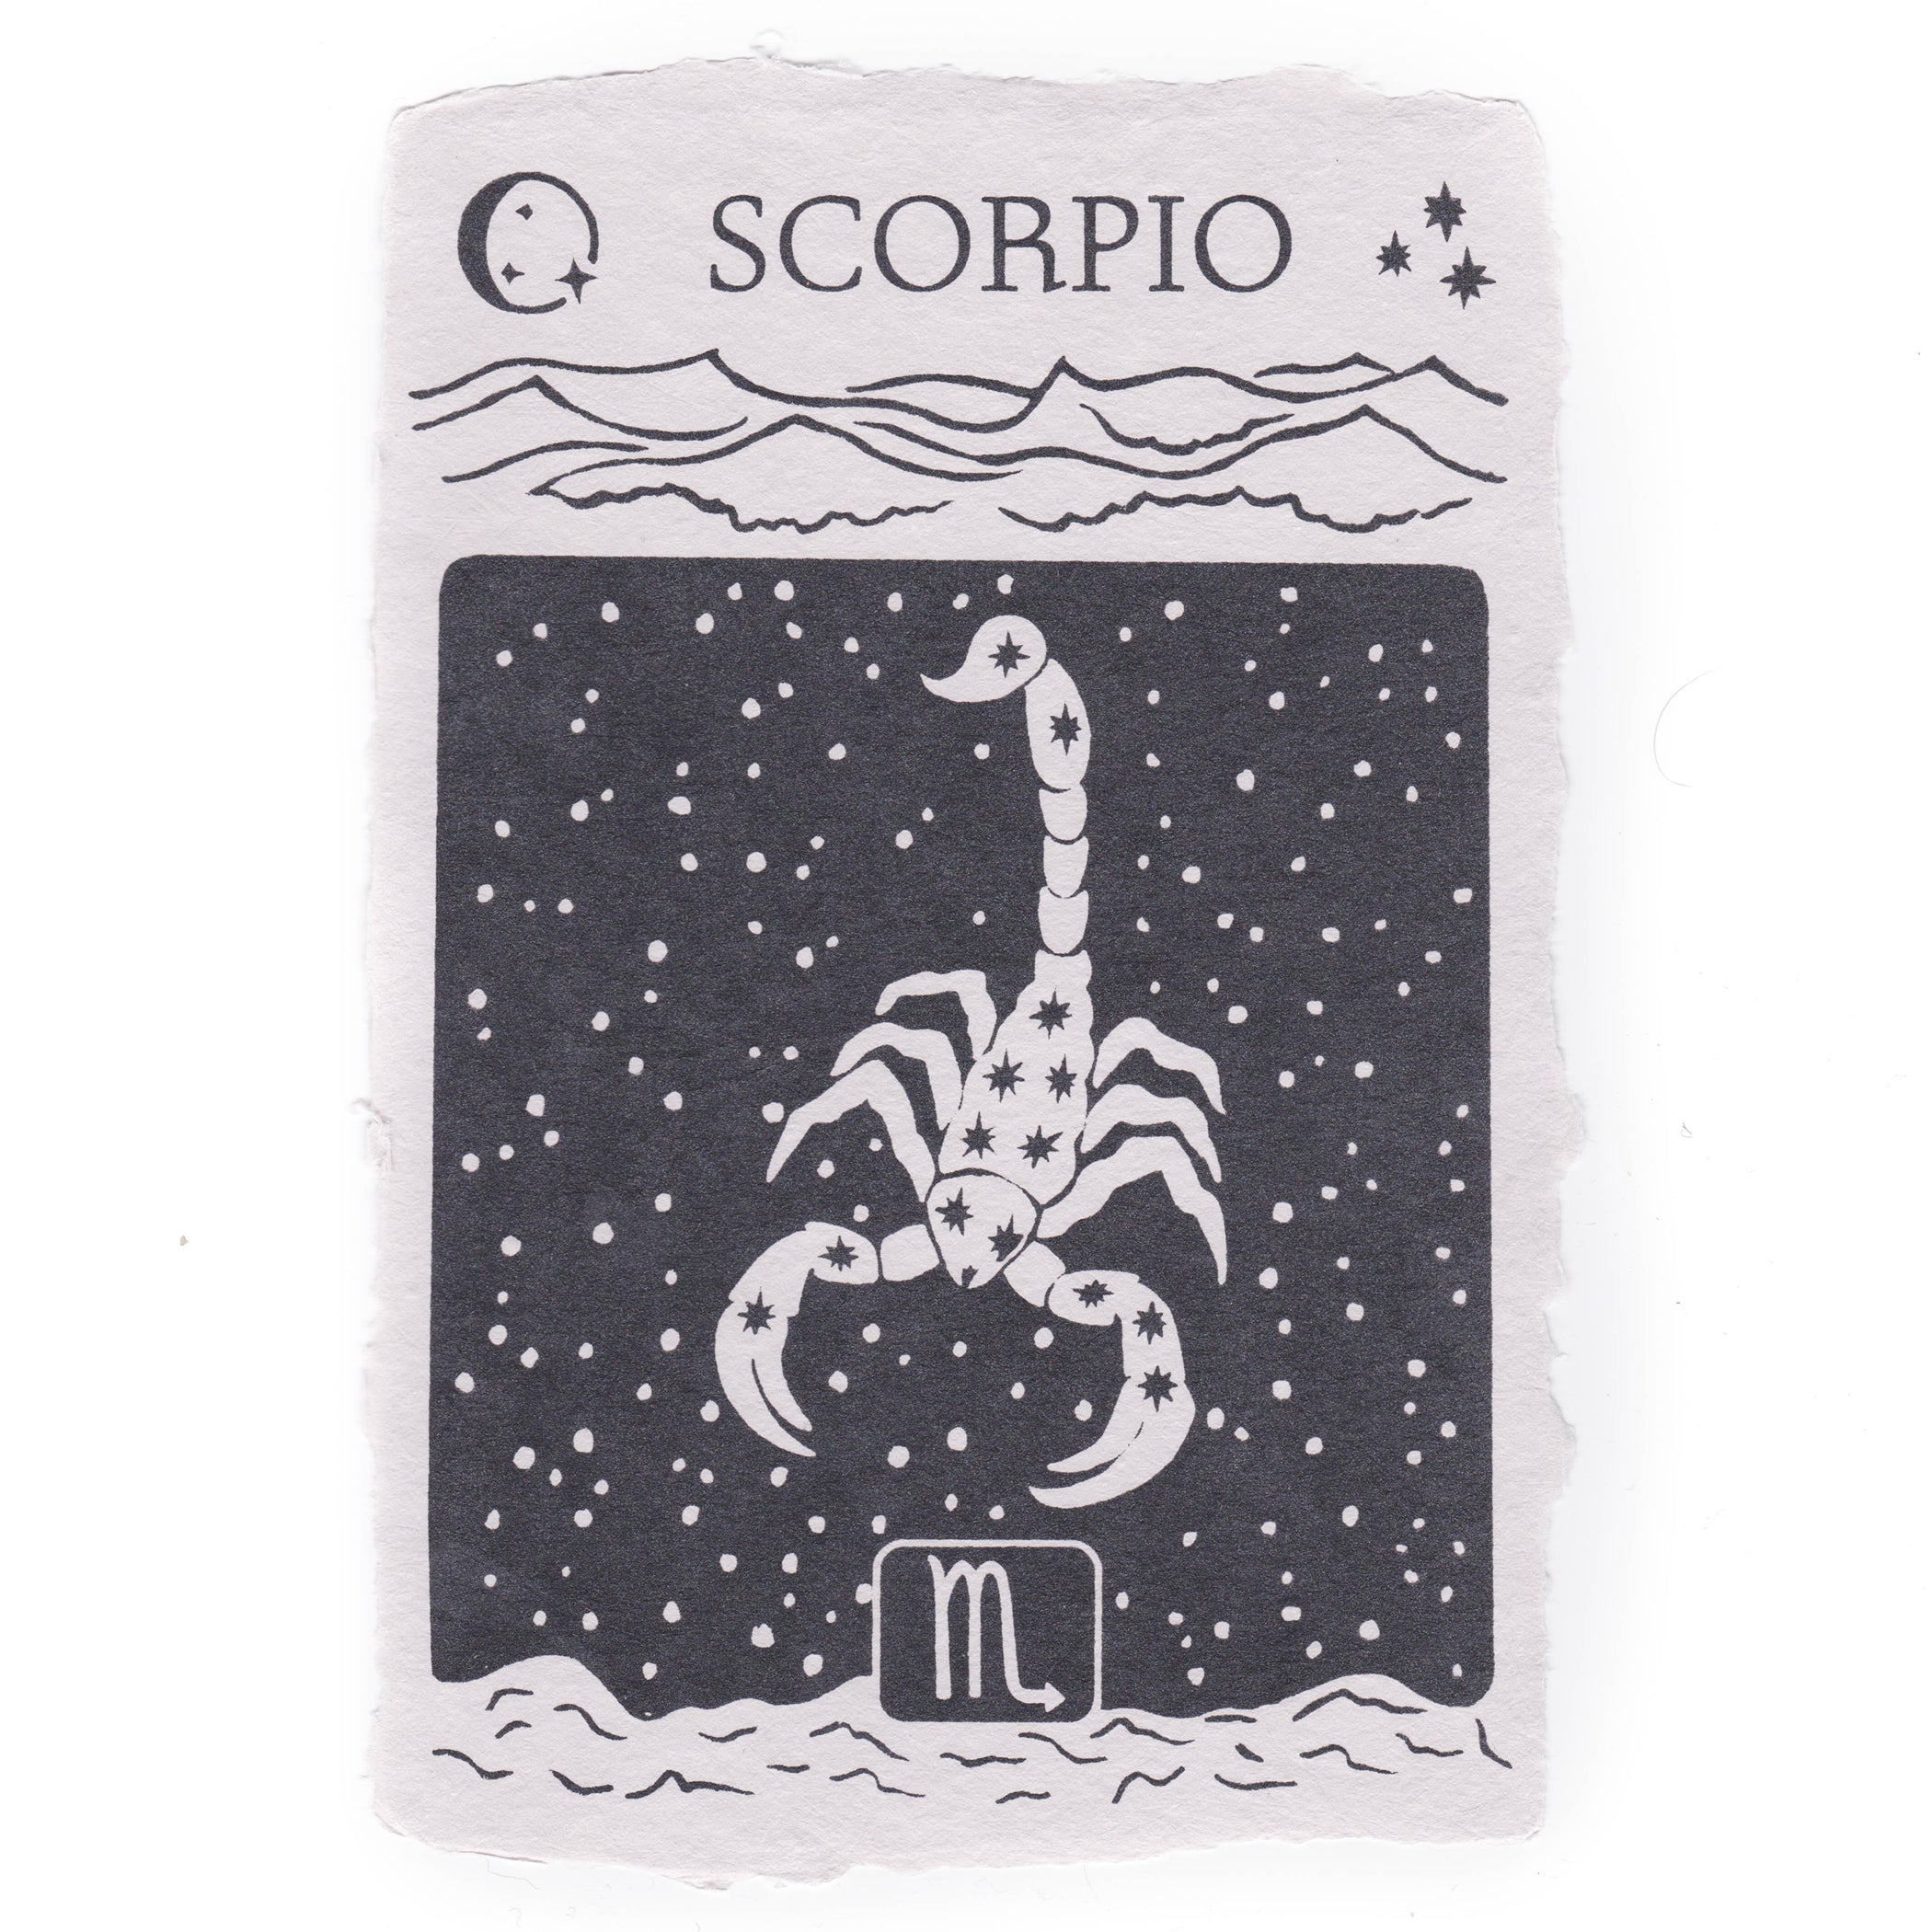 Scorpio Notecard